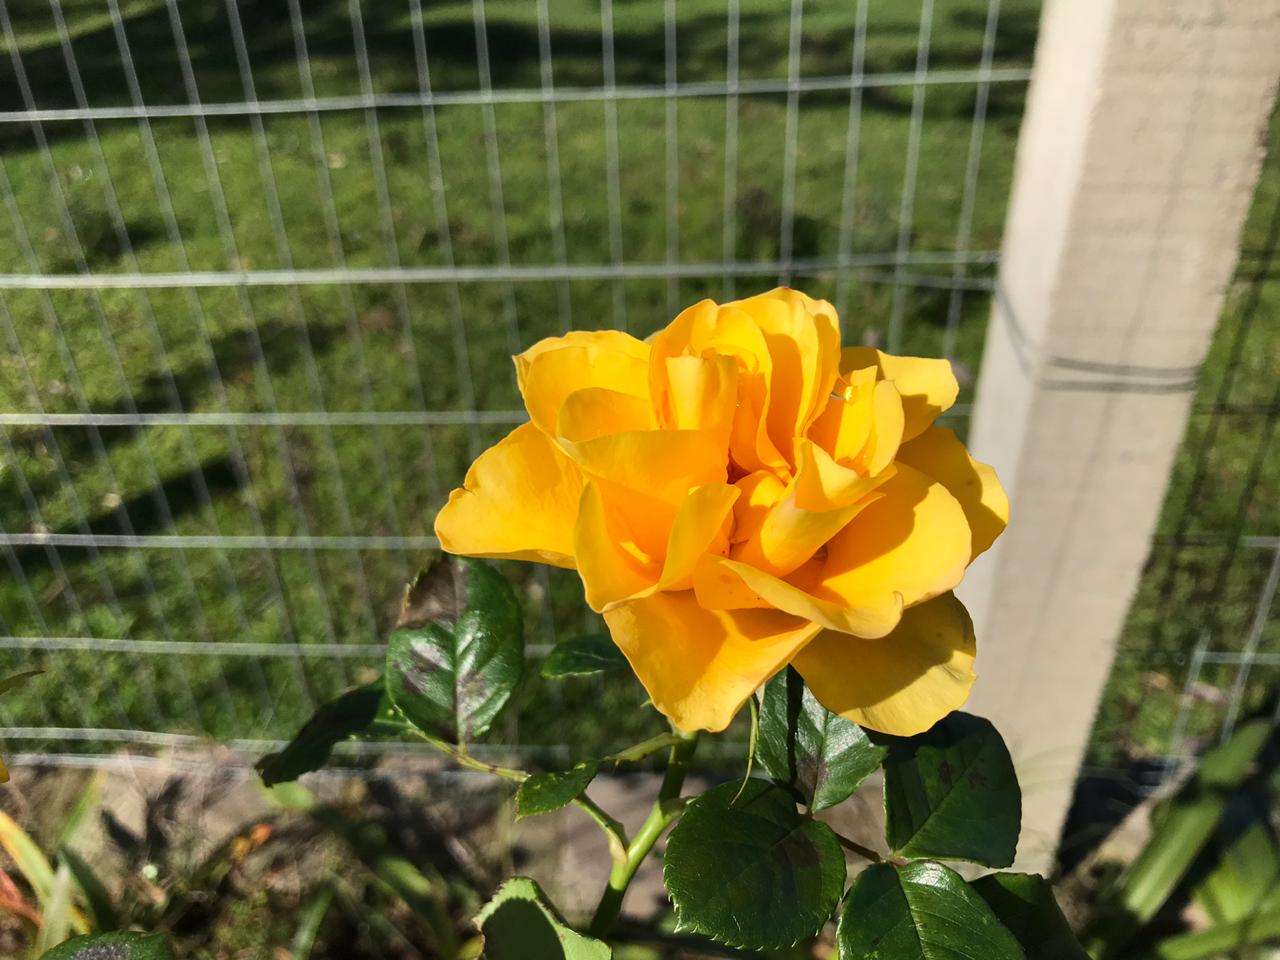 gele roos legpuzzel online